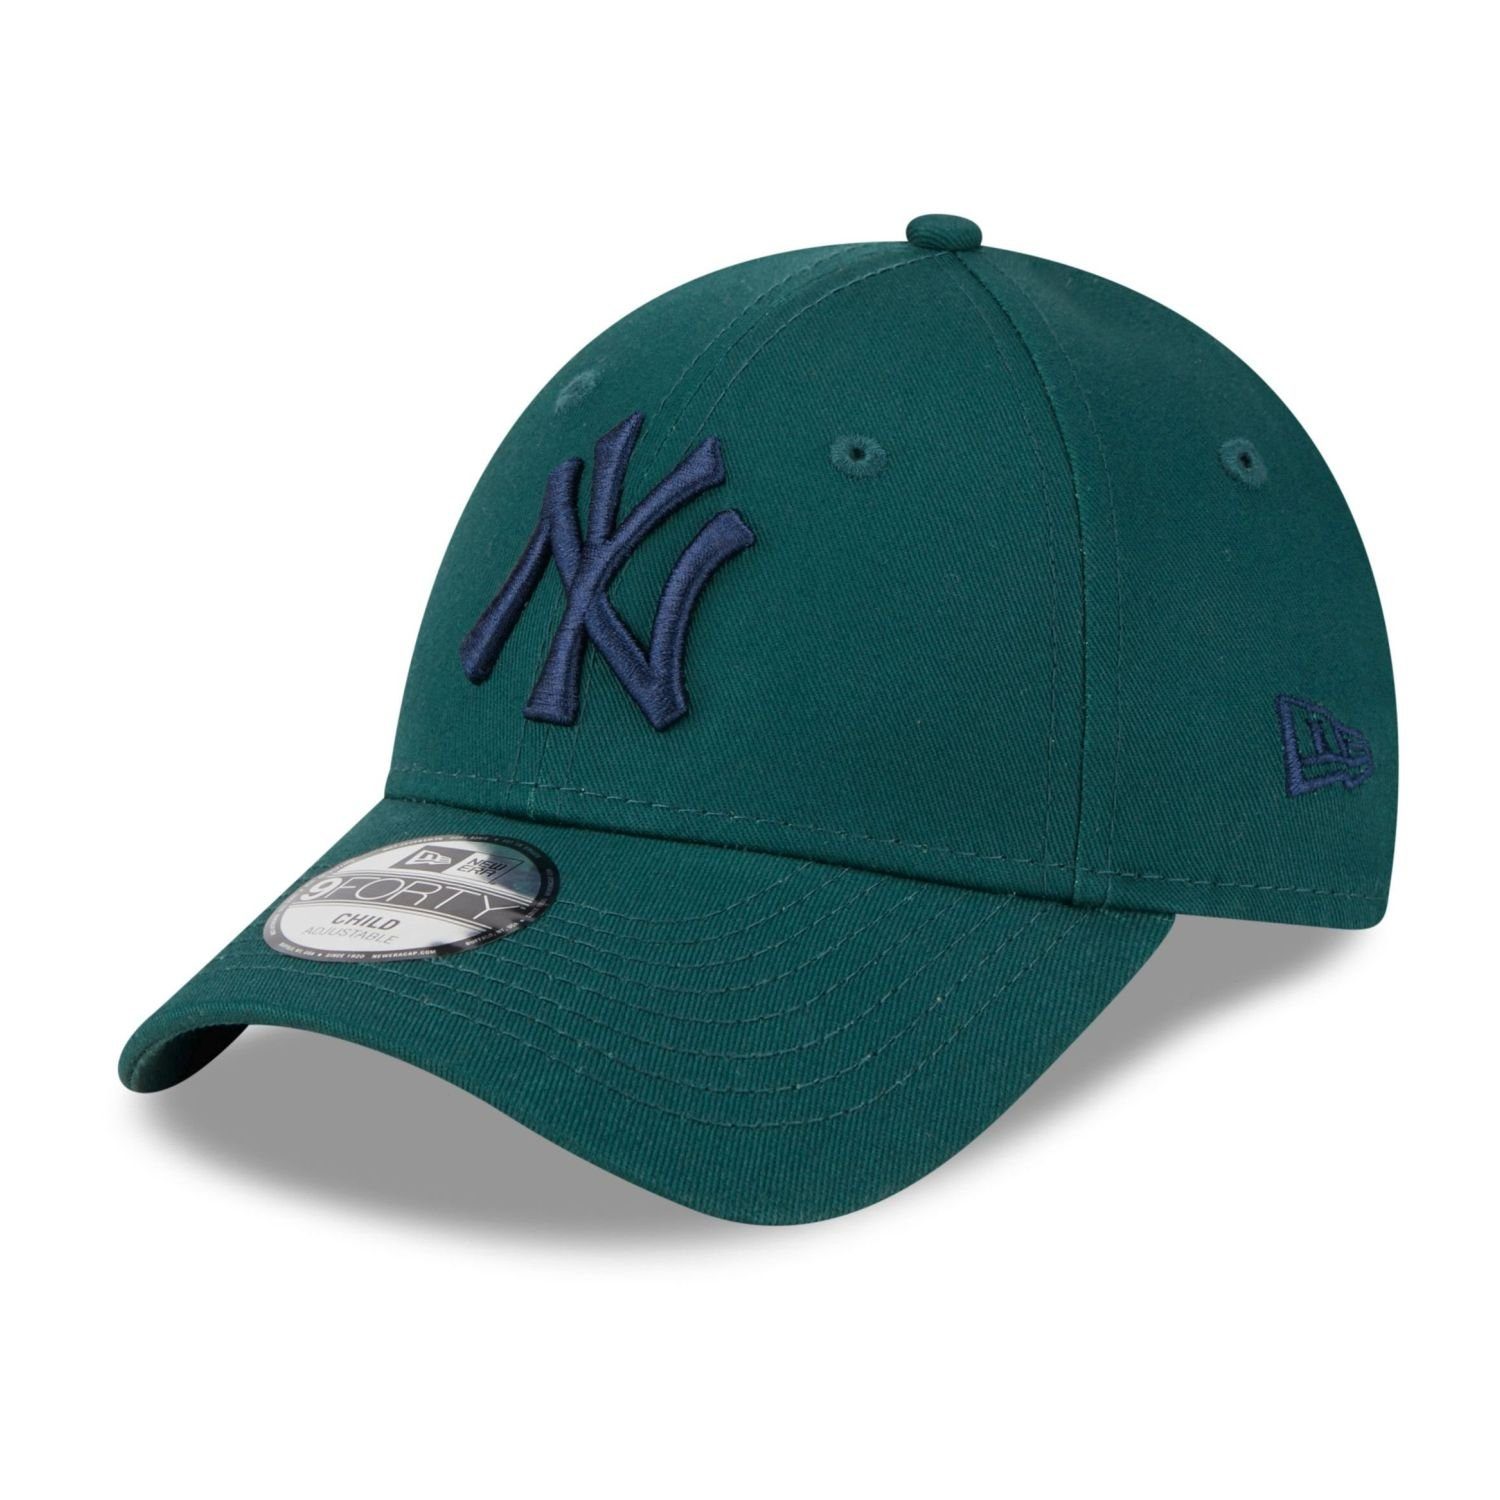 New Era Baseball Cap 9Forty New York Yankees dunkelgrün petrol